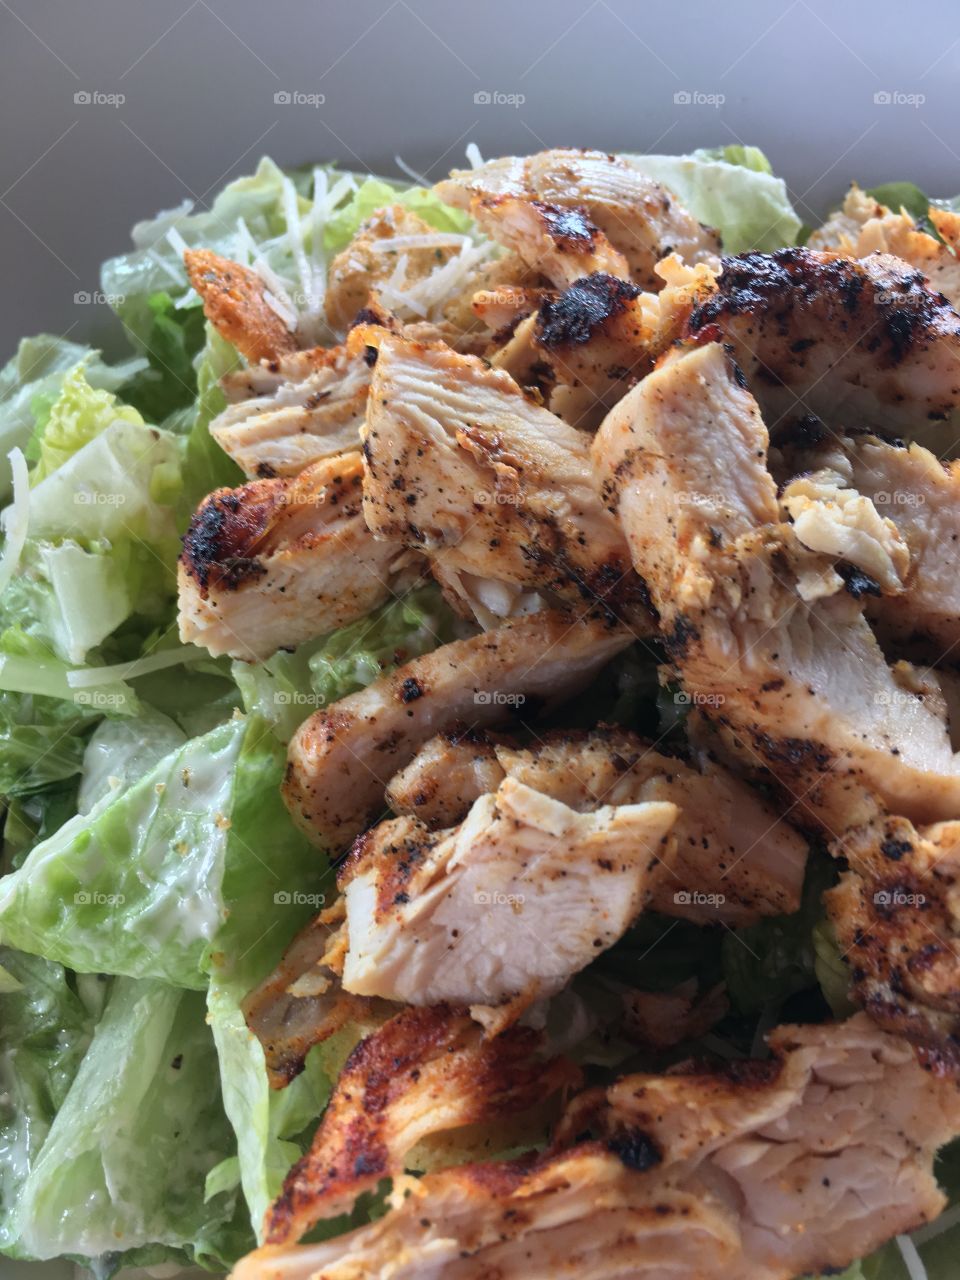 Food porn blackened chicken Cesar salad at Miller’s in Florida 